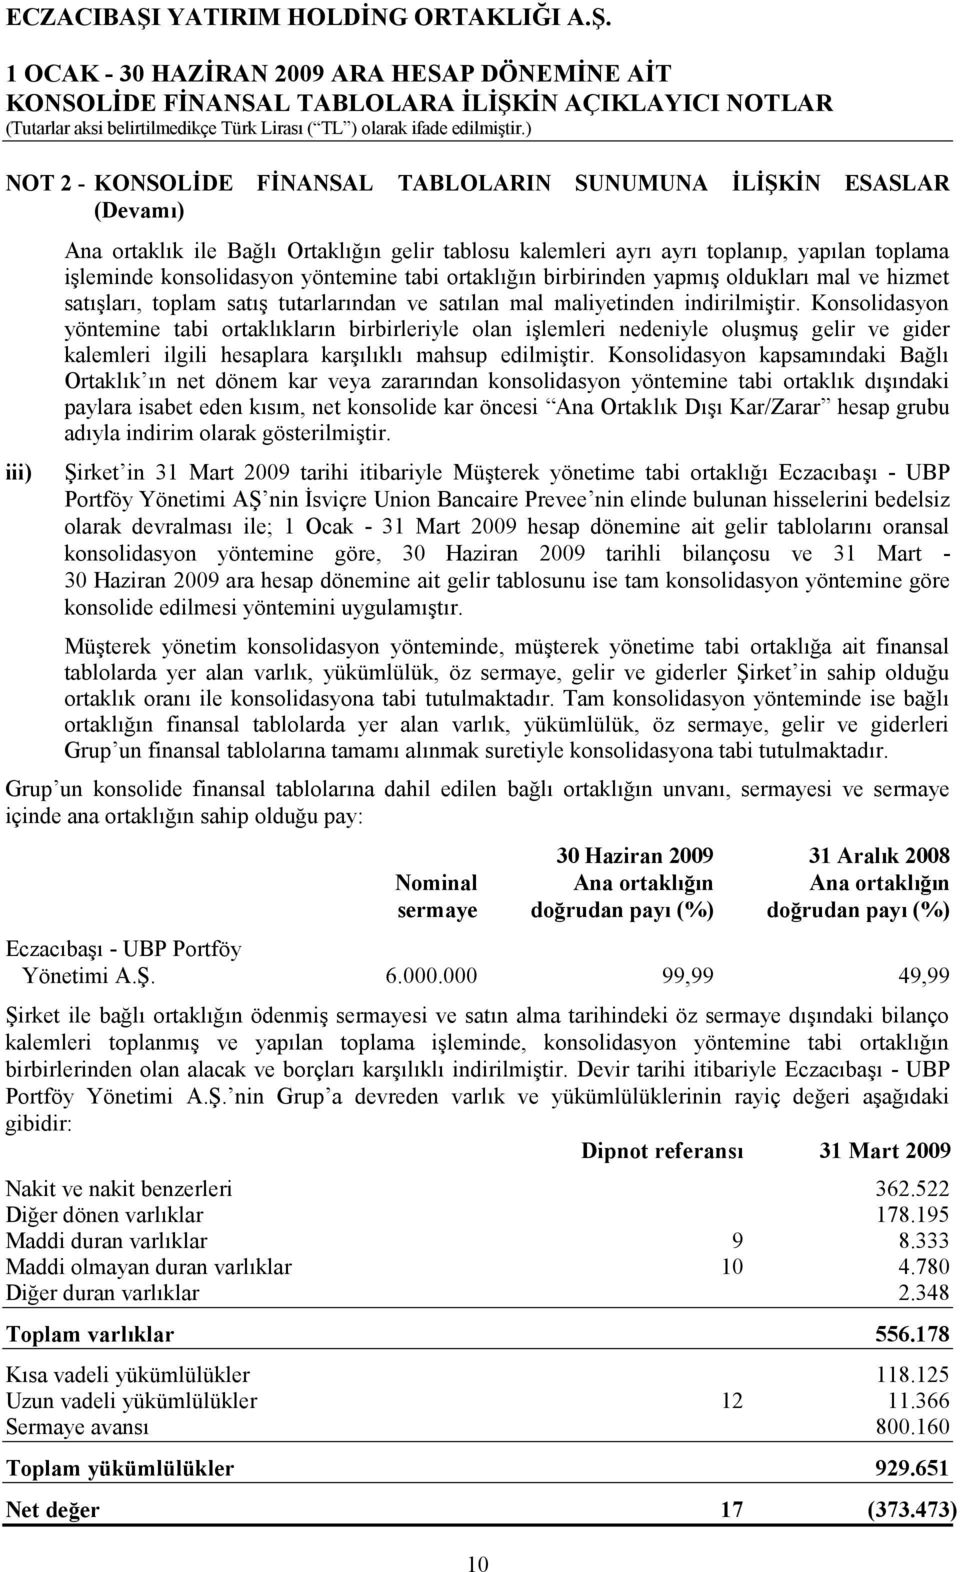 30 Haziran 2009 Nominal sermaye Ec - UBP Portföy 6.000.